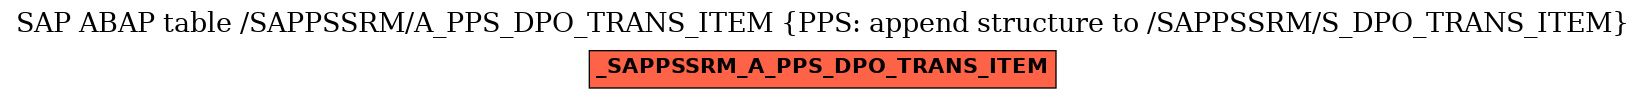 E-R Diagram for table /SAPPSSRM/A_PPS_DPO_TRANS_ITEM (PPS: append structure to /SAPPSSRM/S_DPO_TRANS_ITEM)